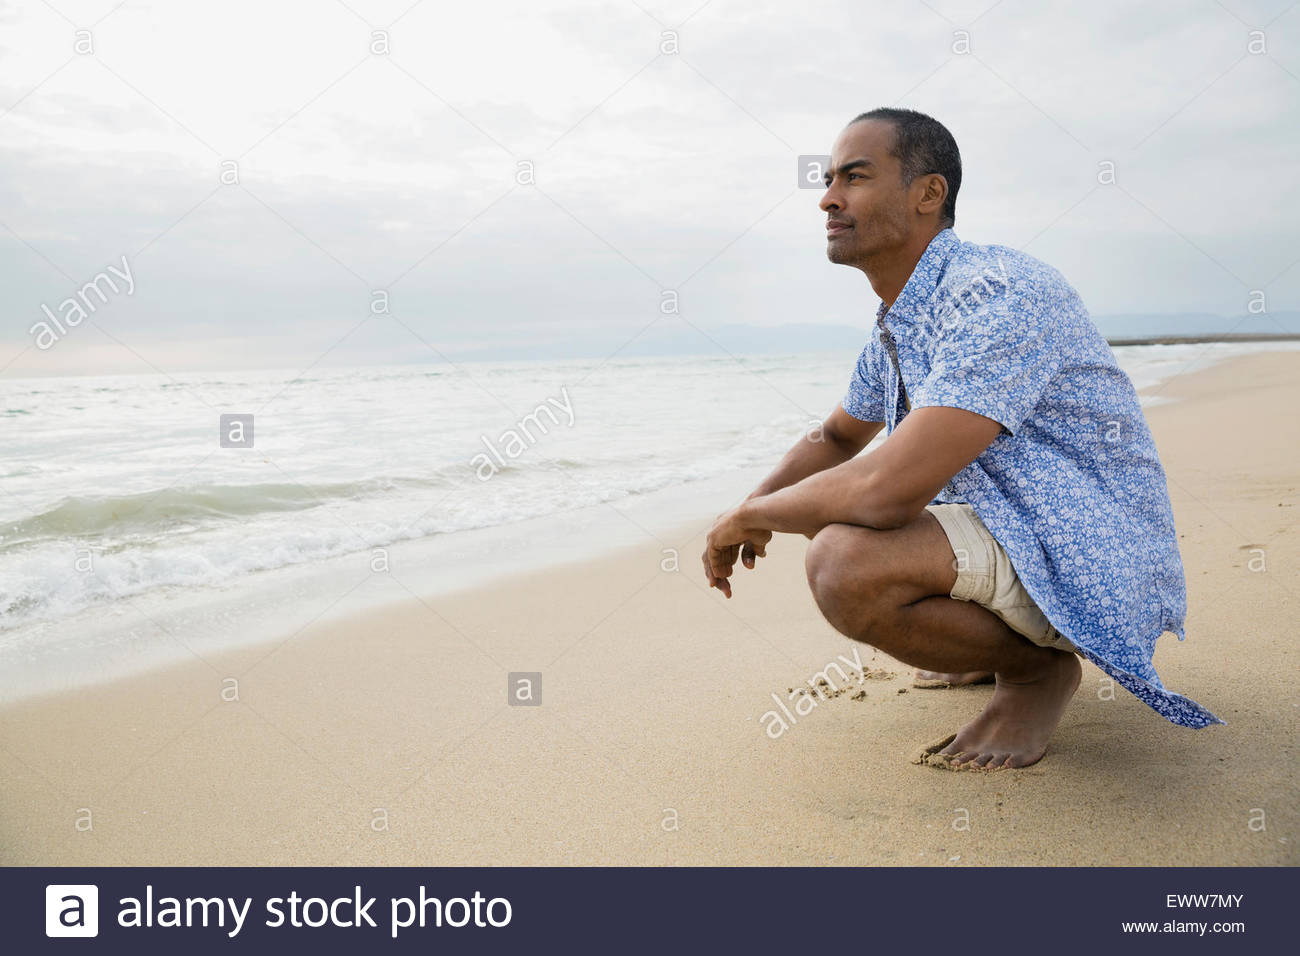 Pensive man crouching on beach looking at ocean Stock Photo